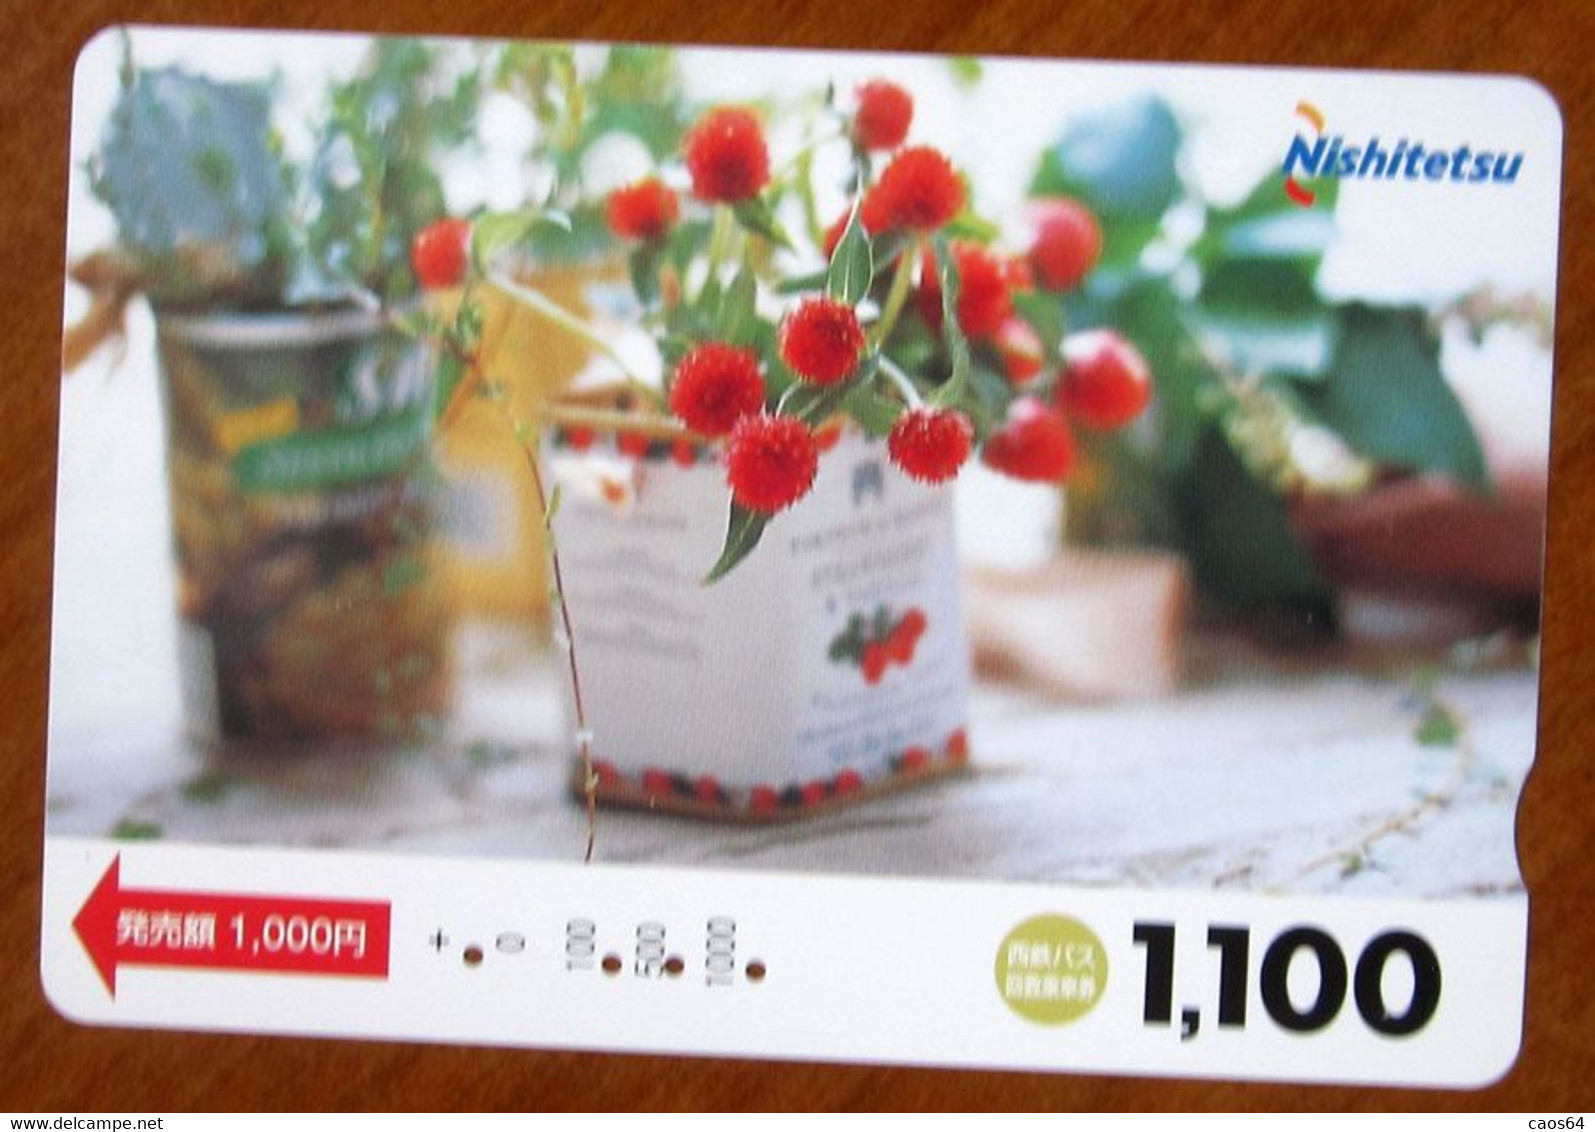 GIAPPONE Ticket Biglietto Bus MetroTreni Fiori Flower - Nishitetsu Card 1.100 ¥ - Usato - Welt